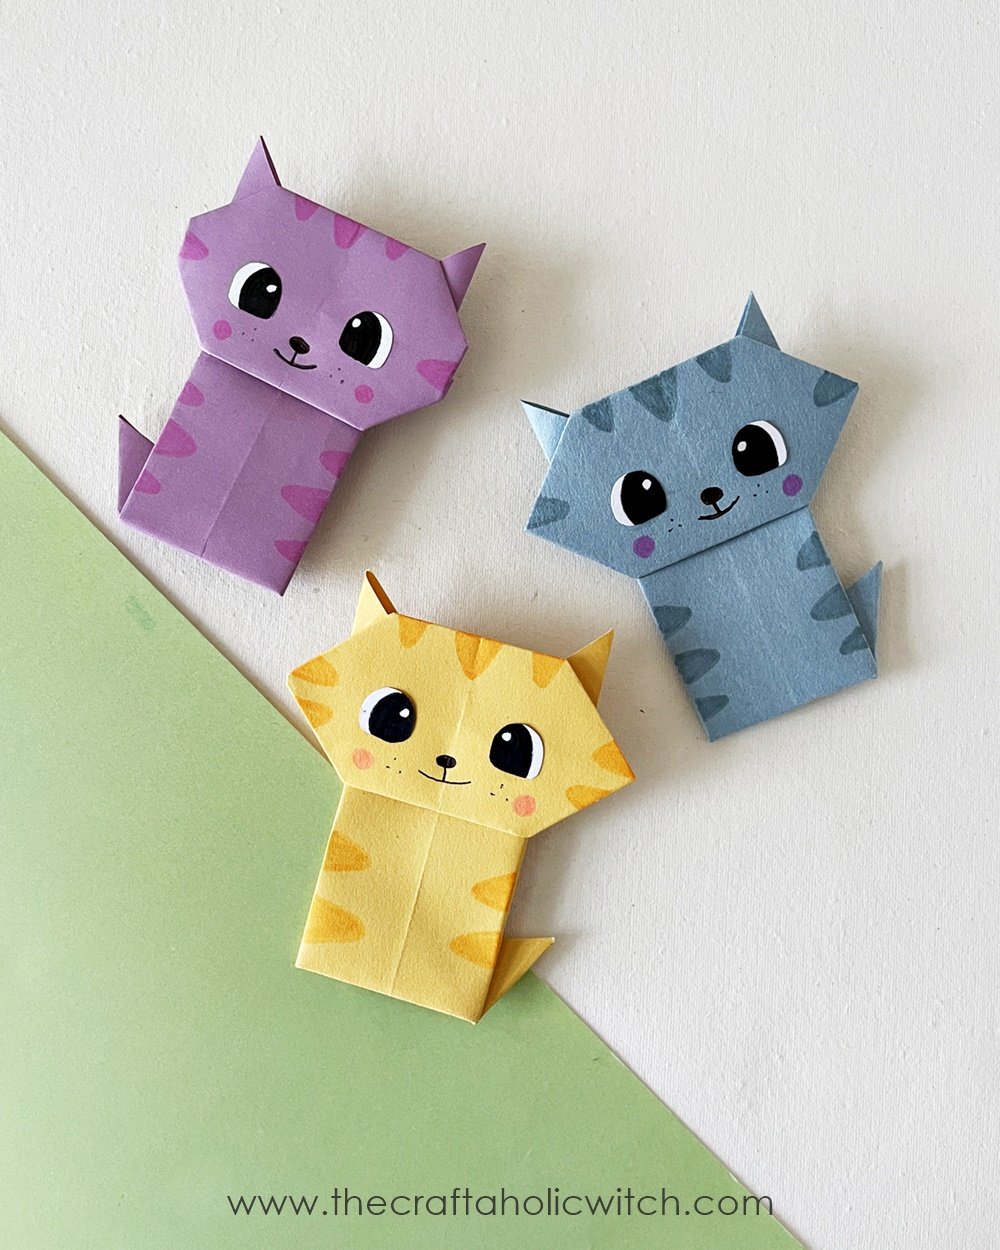 The single-sheet origami cat